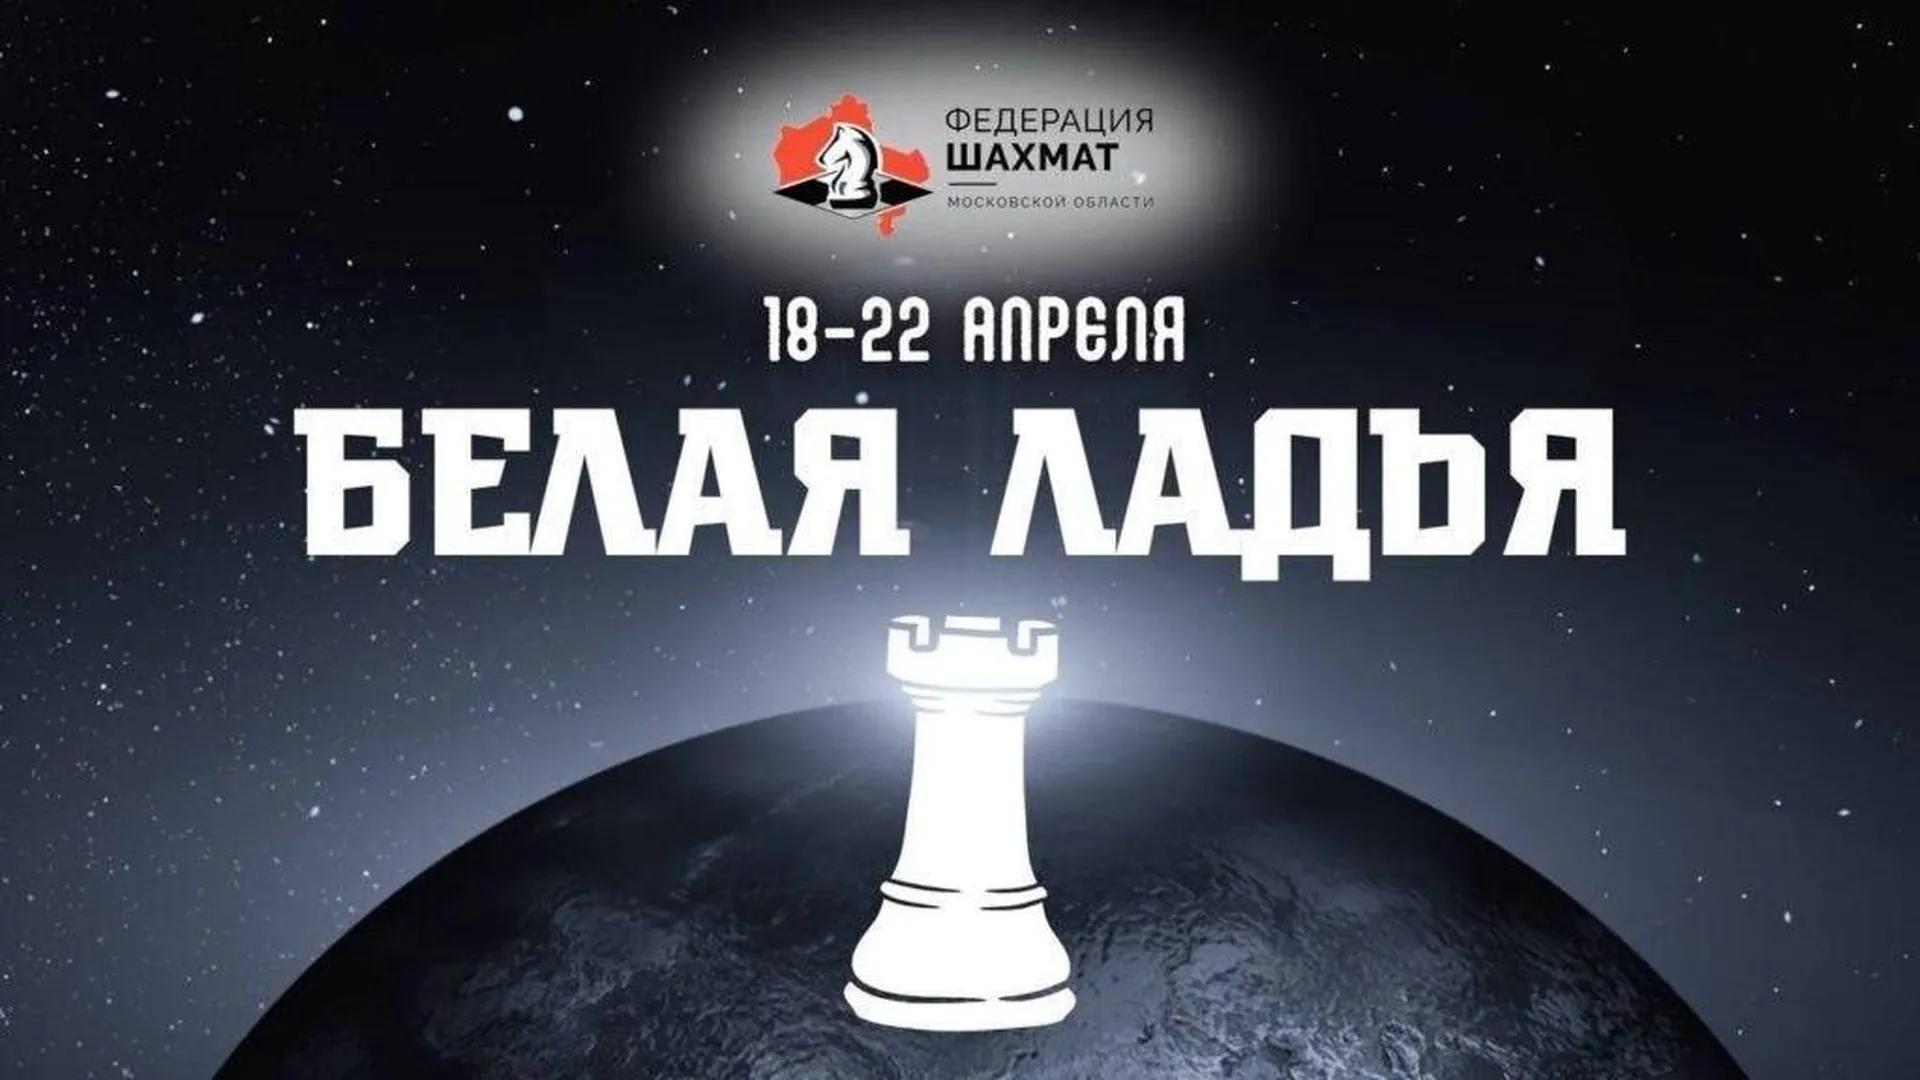 Федерация шахмат Московской области